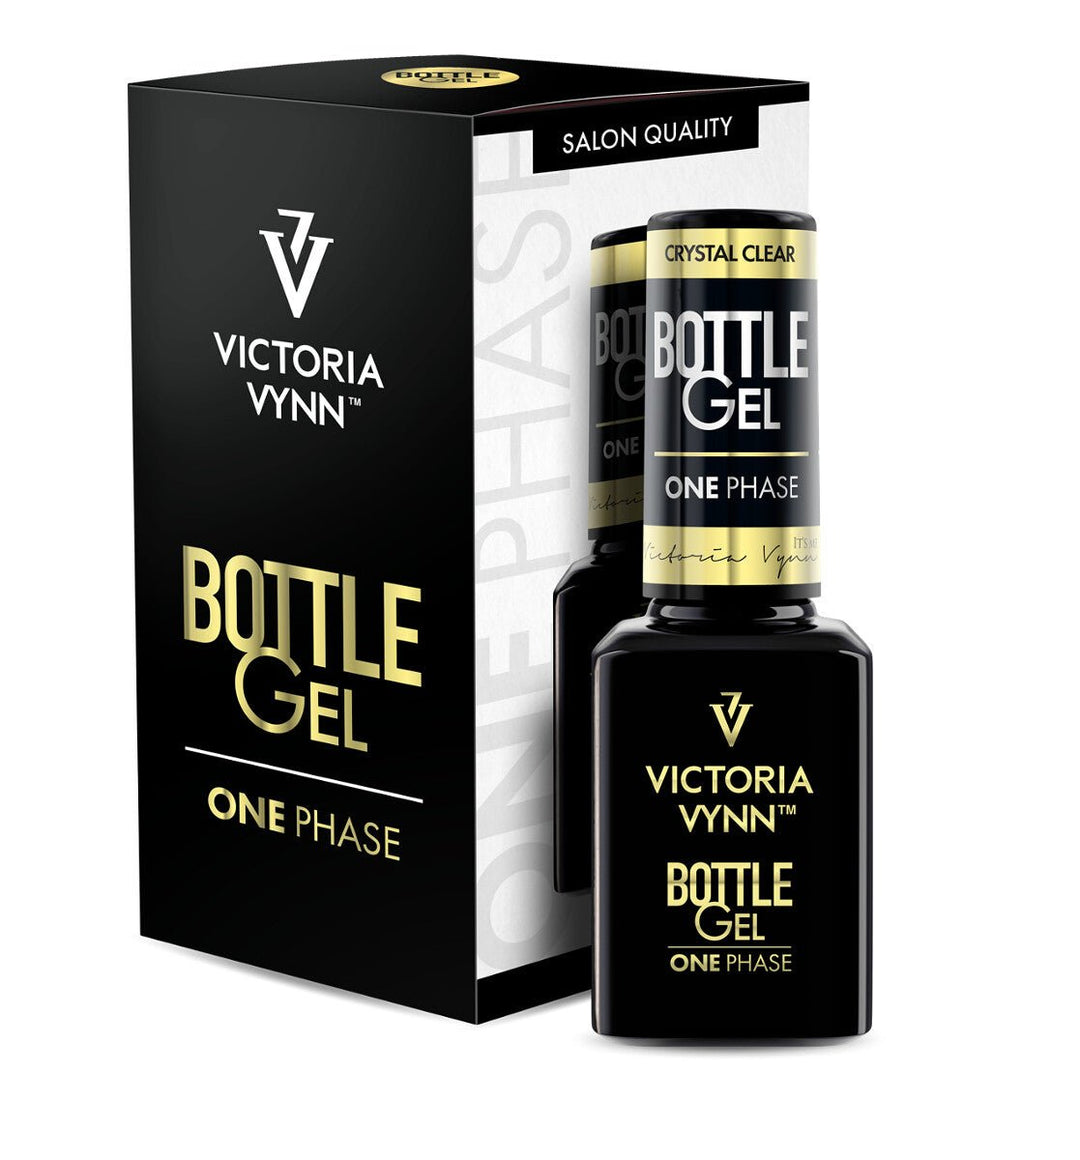 VICTORIA VYNN ™ Bottle Gel One Phase Clear - Elegance Beauty